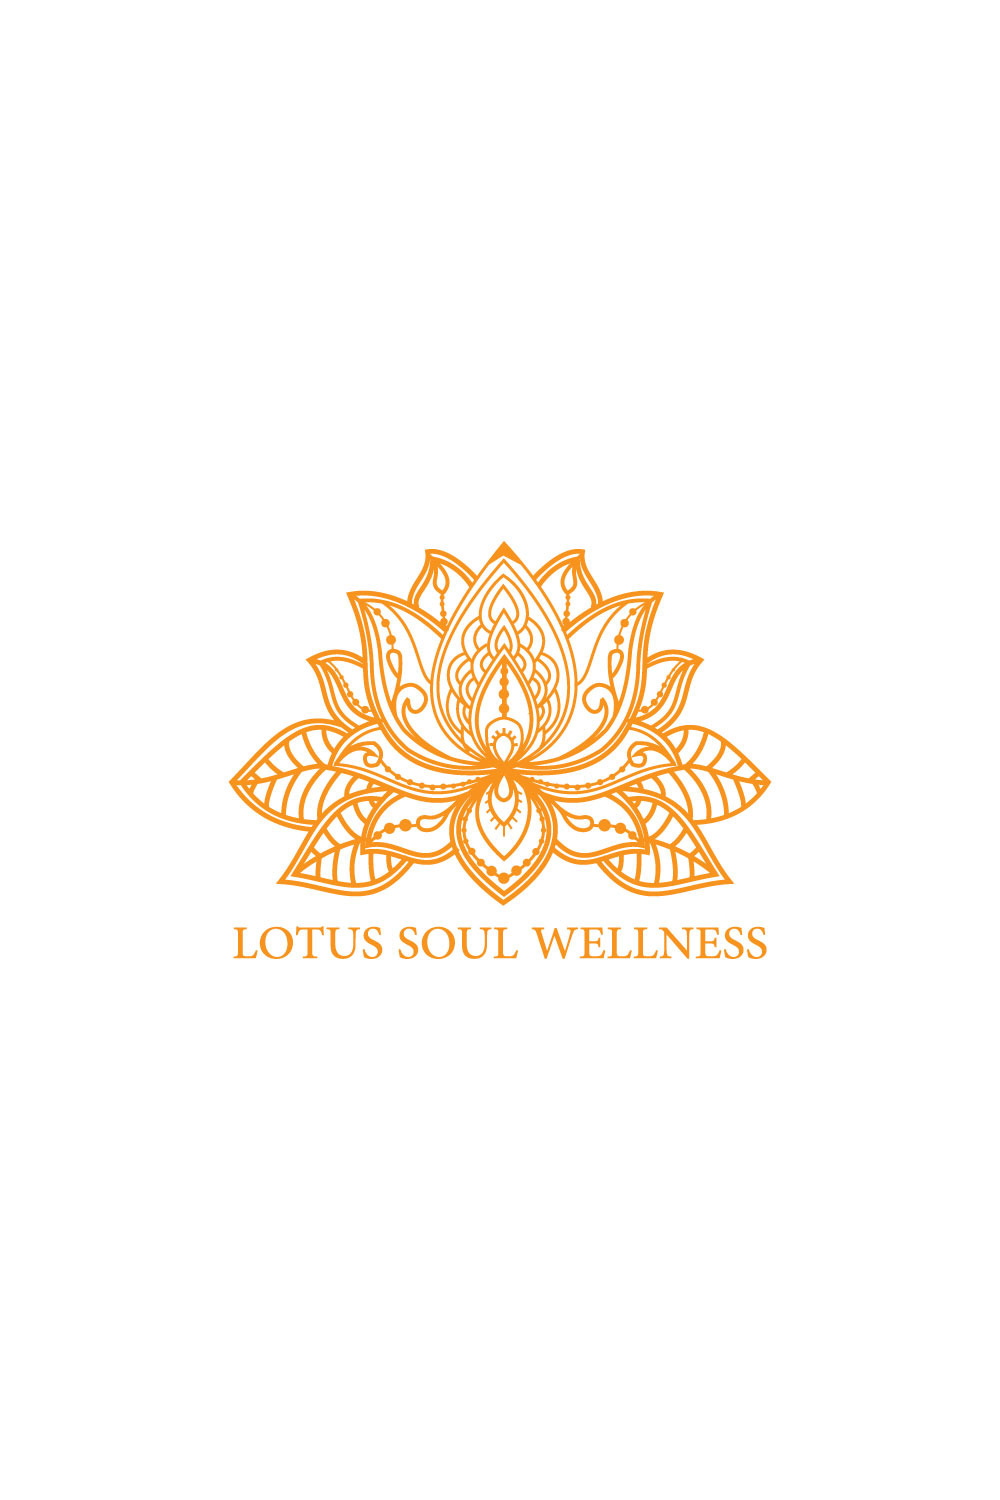 Lotus Flower Design Logo pinterest image.